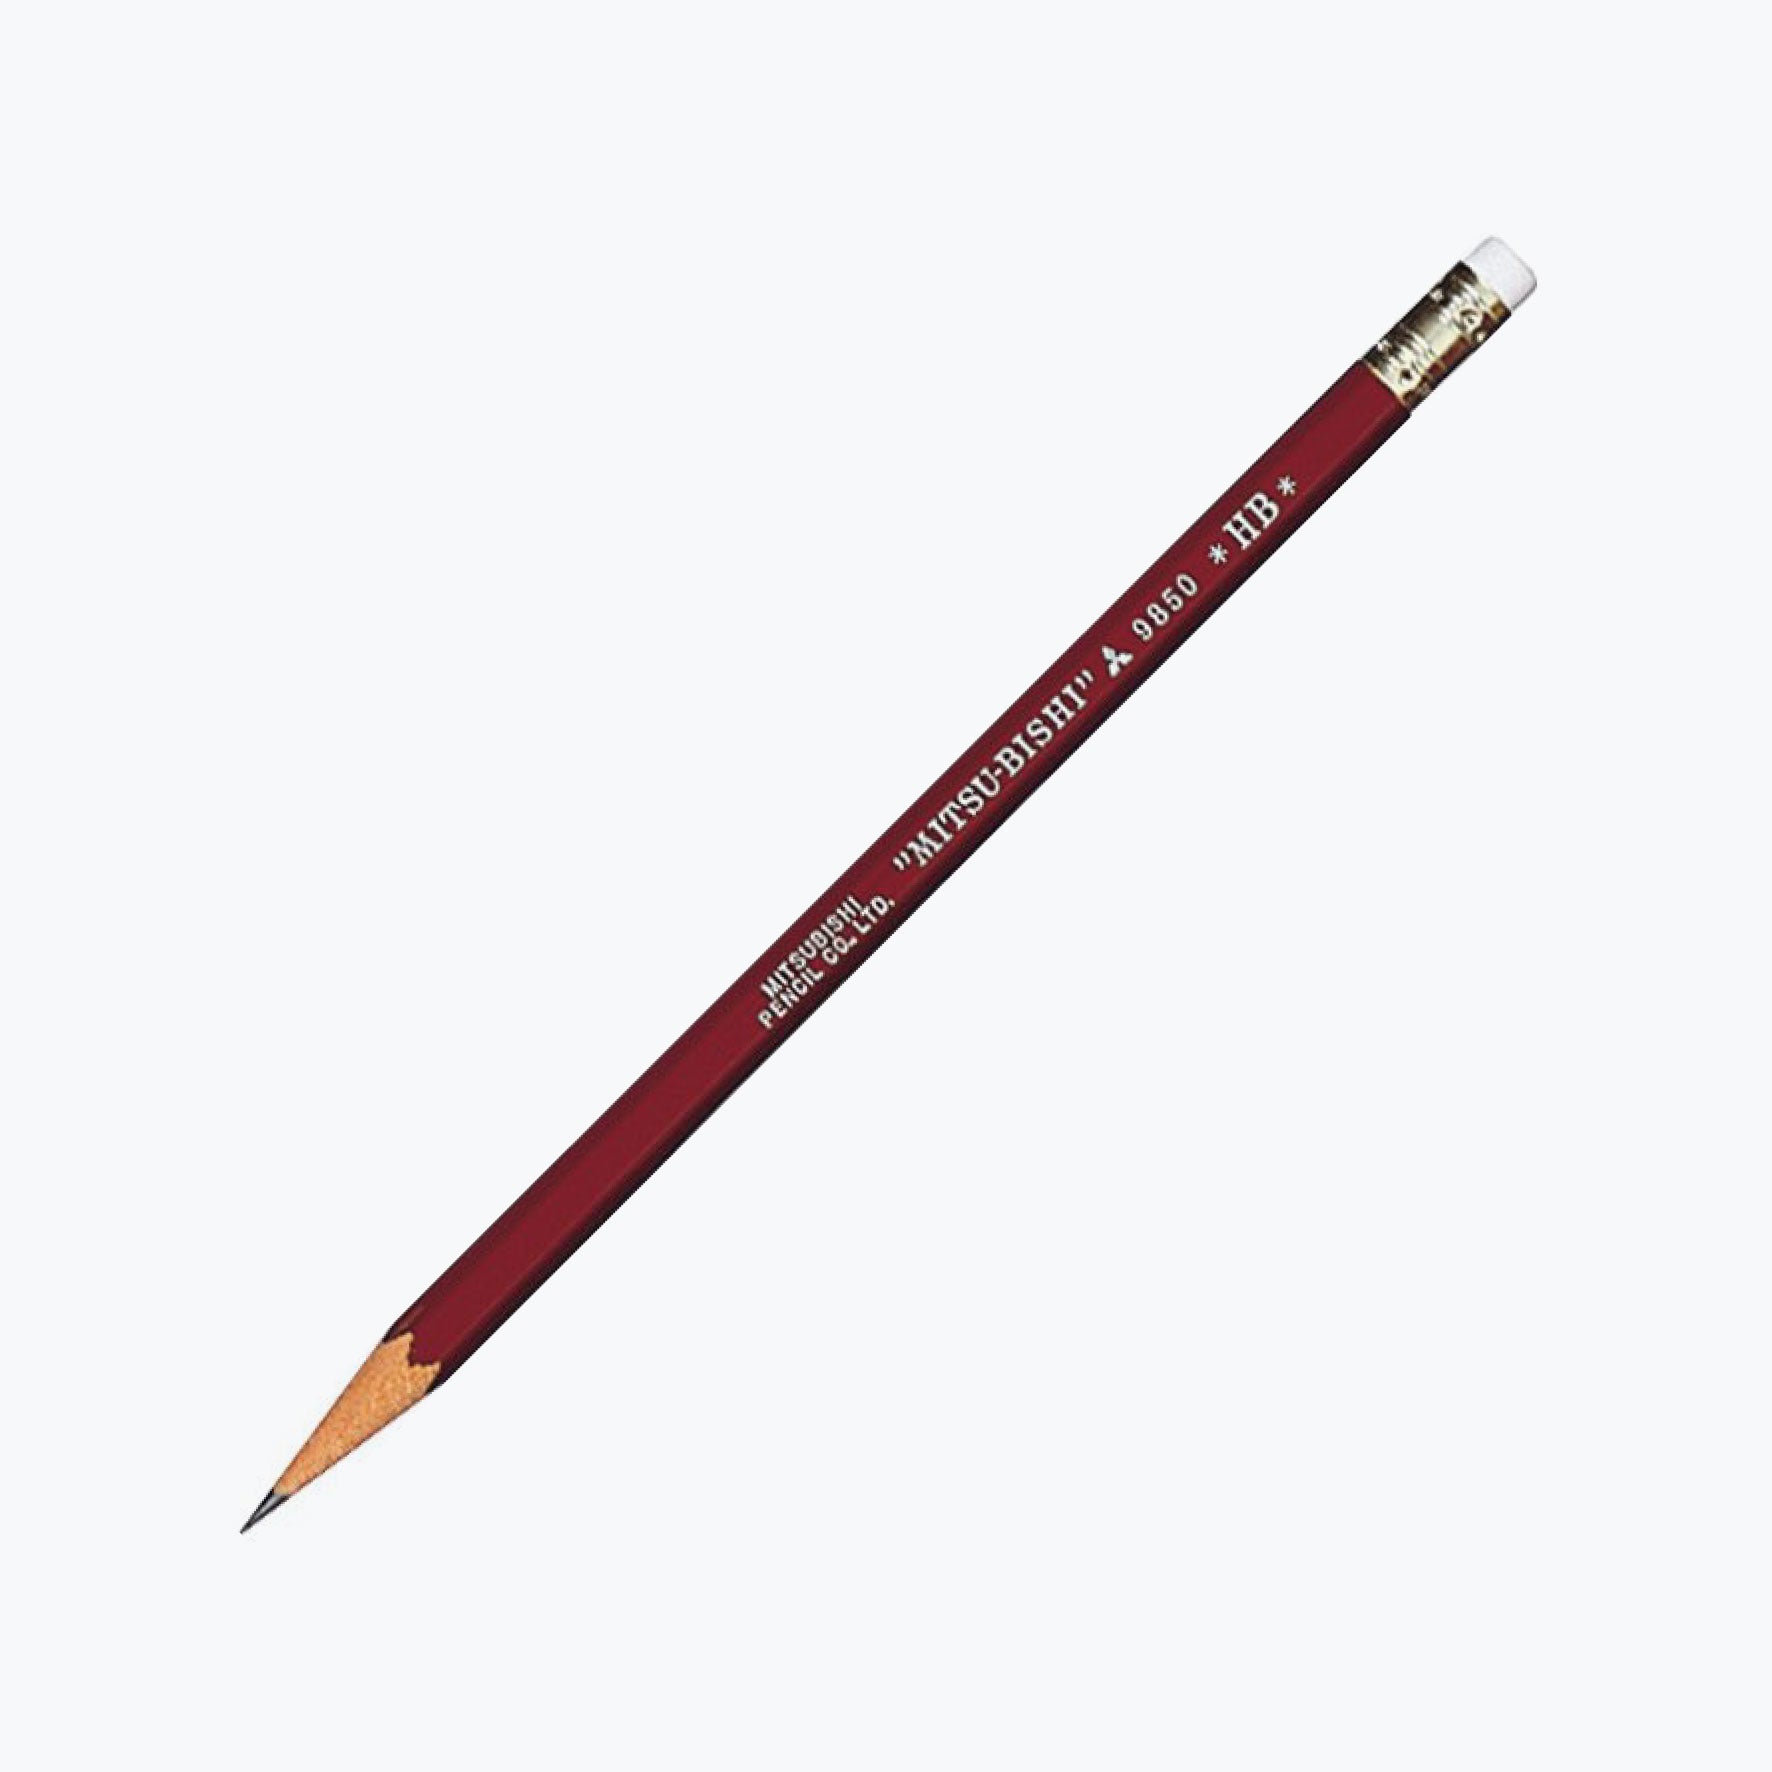 Mitsubishi - Pencil - 9850 (HB) - Pack of 2